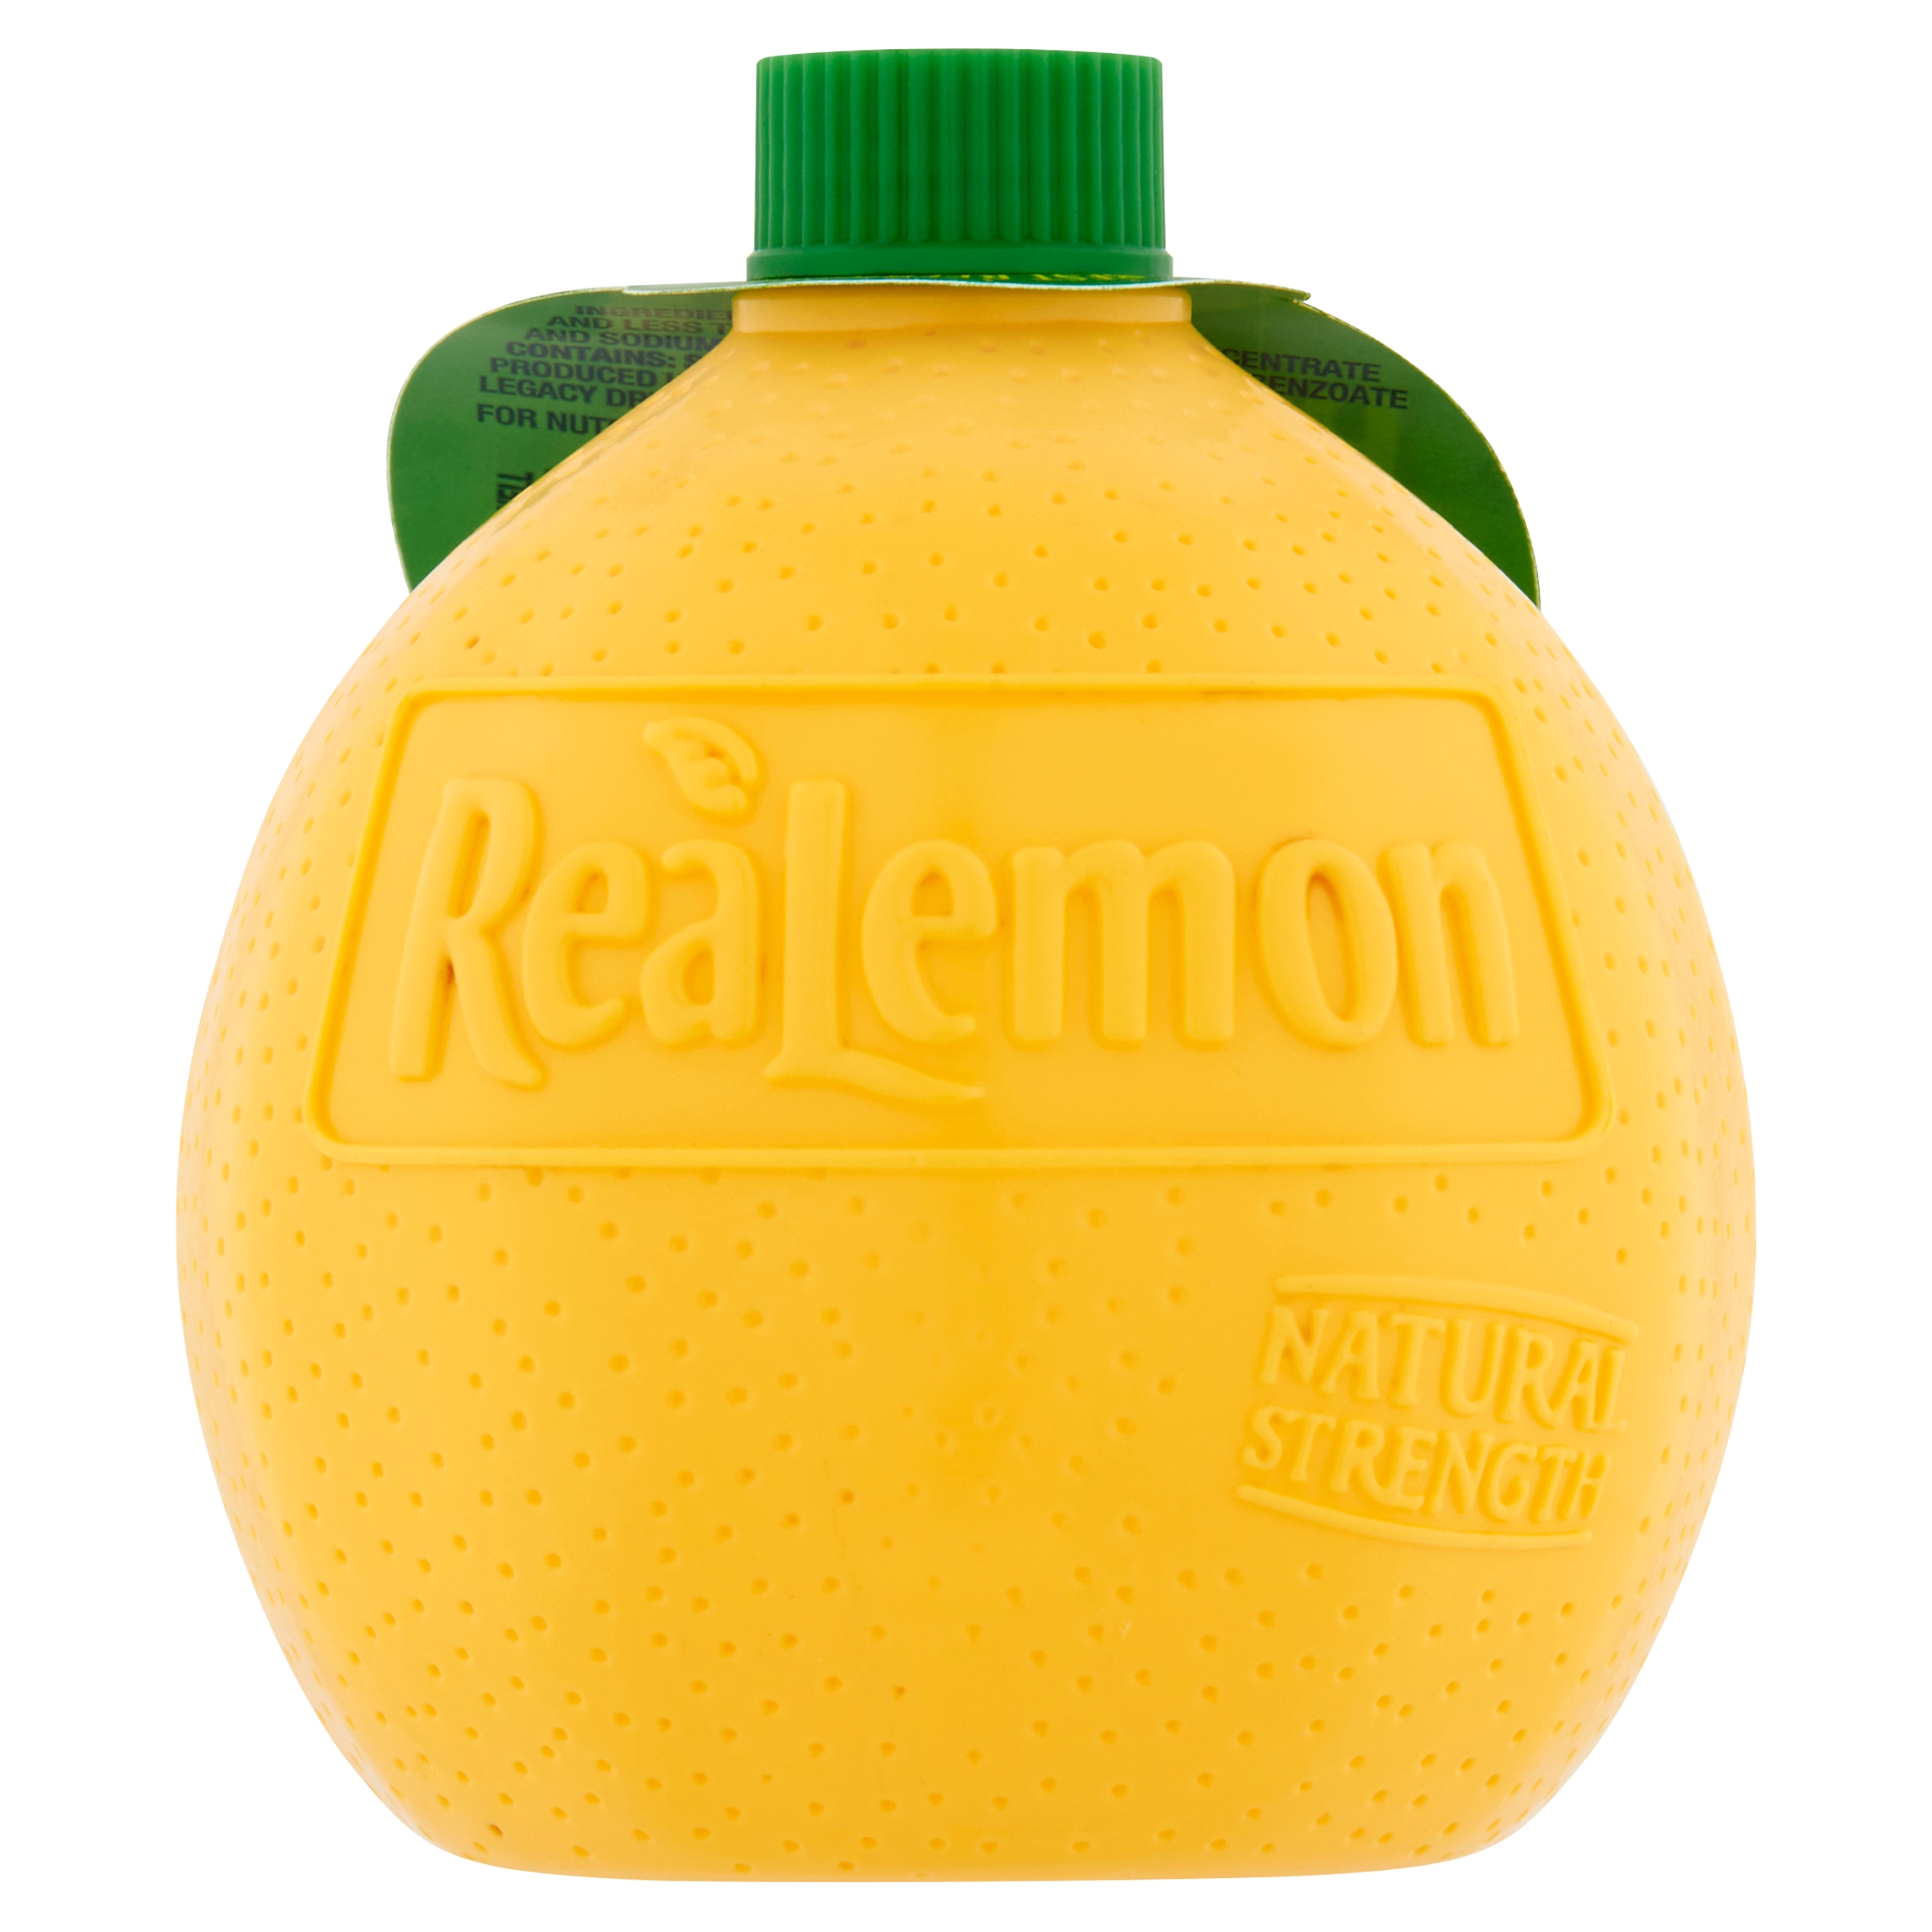 ReaLemon 100% Lemon Juice, 4.5 fl oz bottle - image 3 of 5